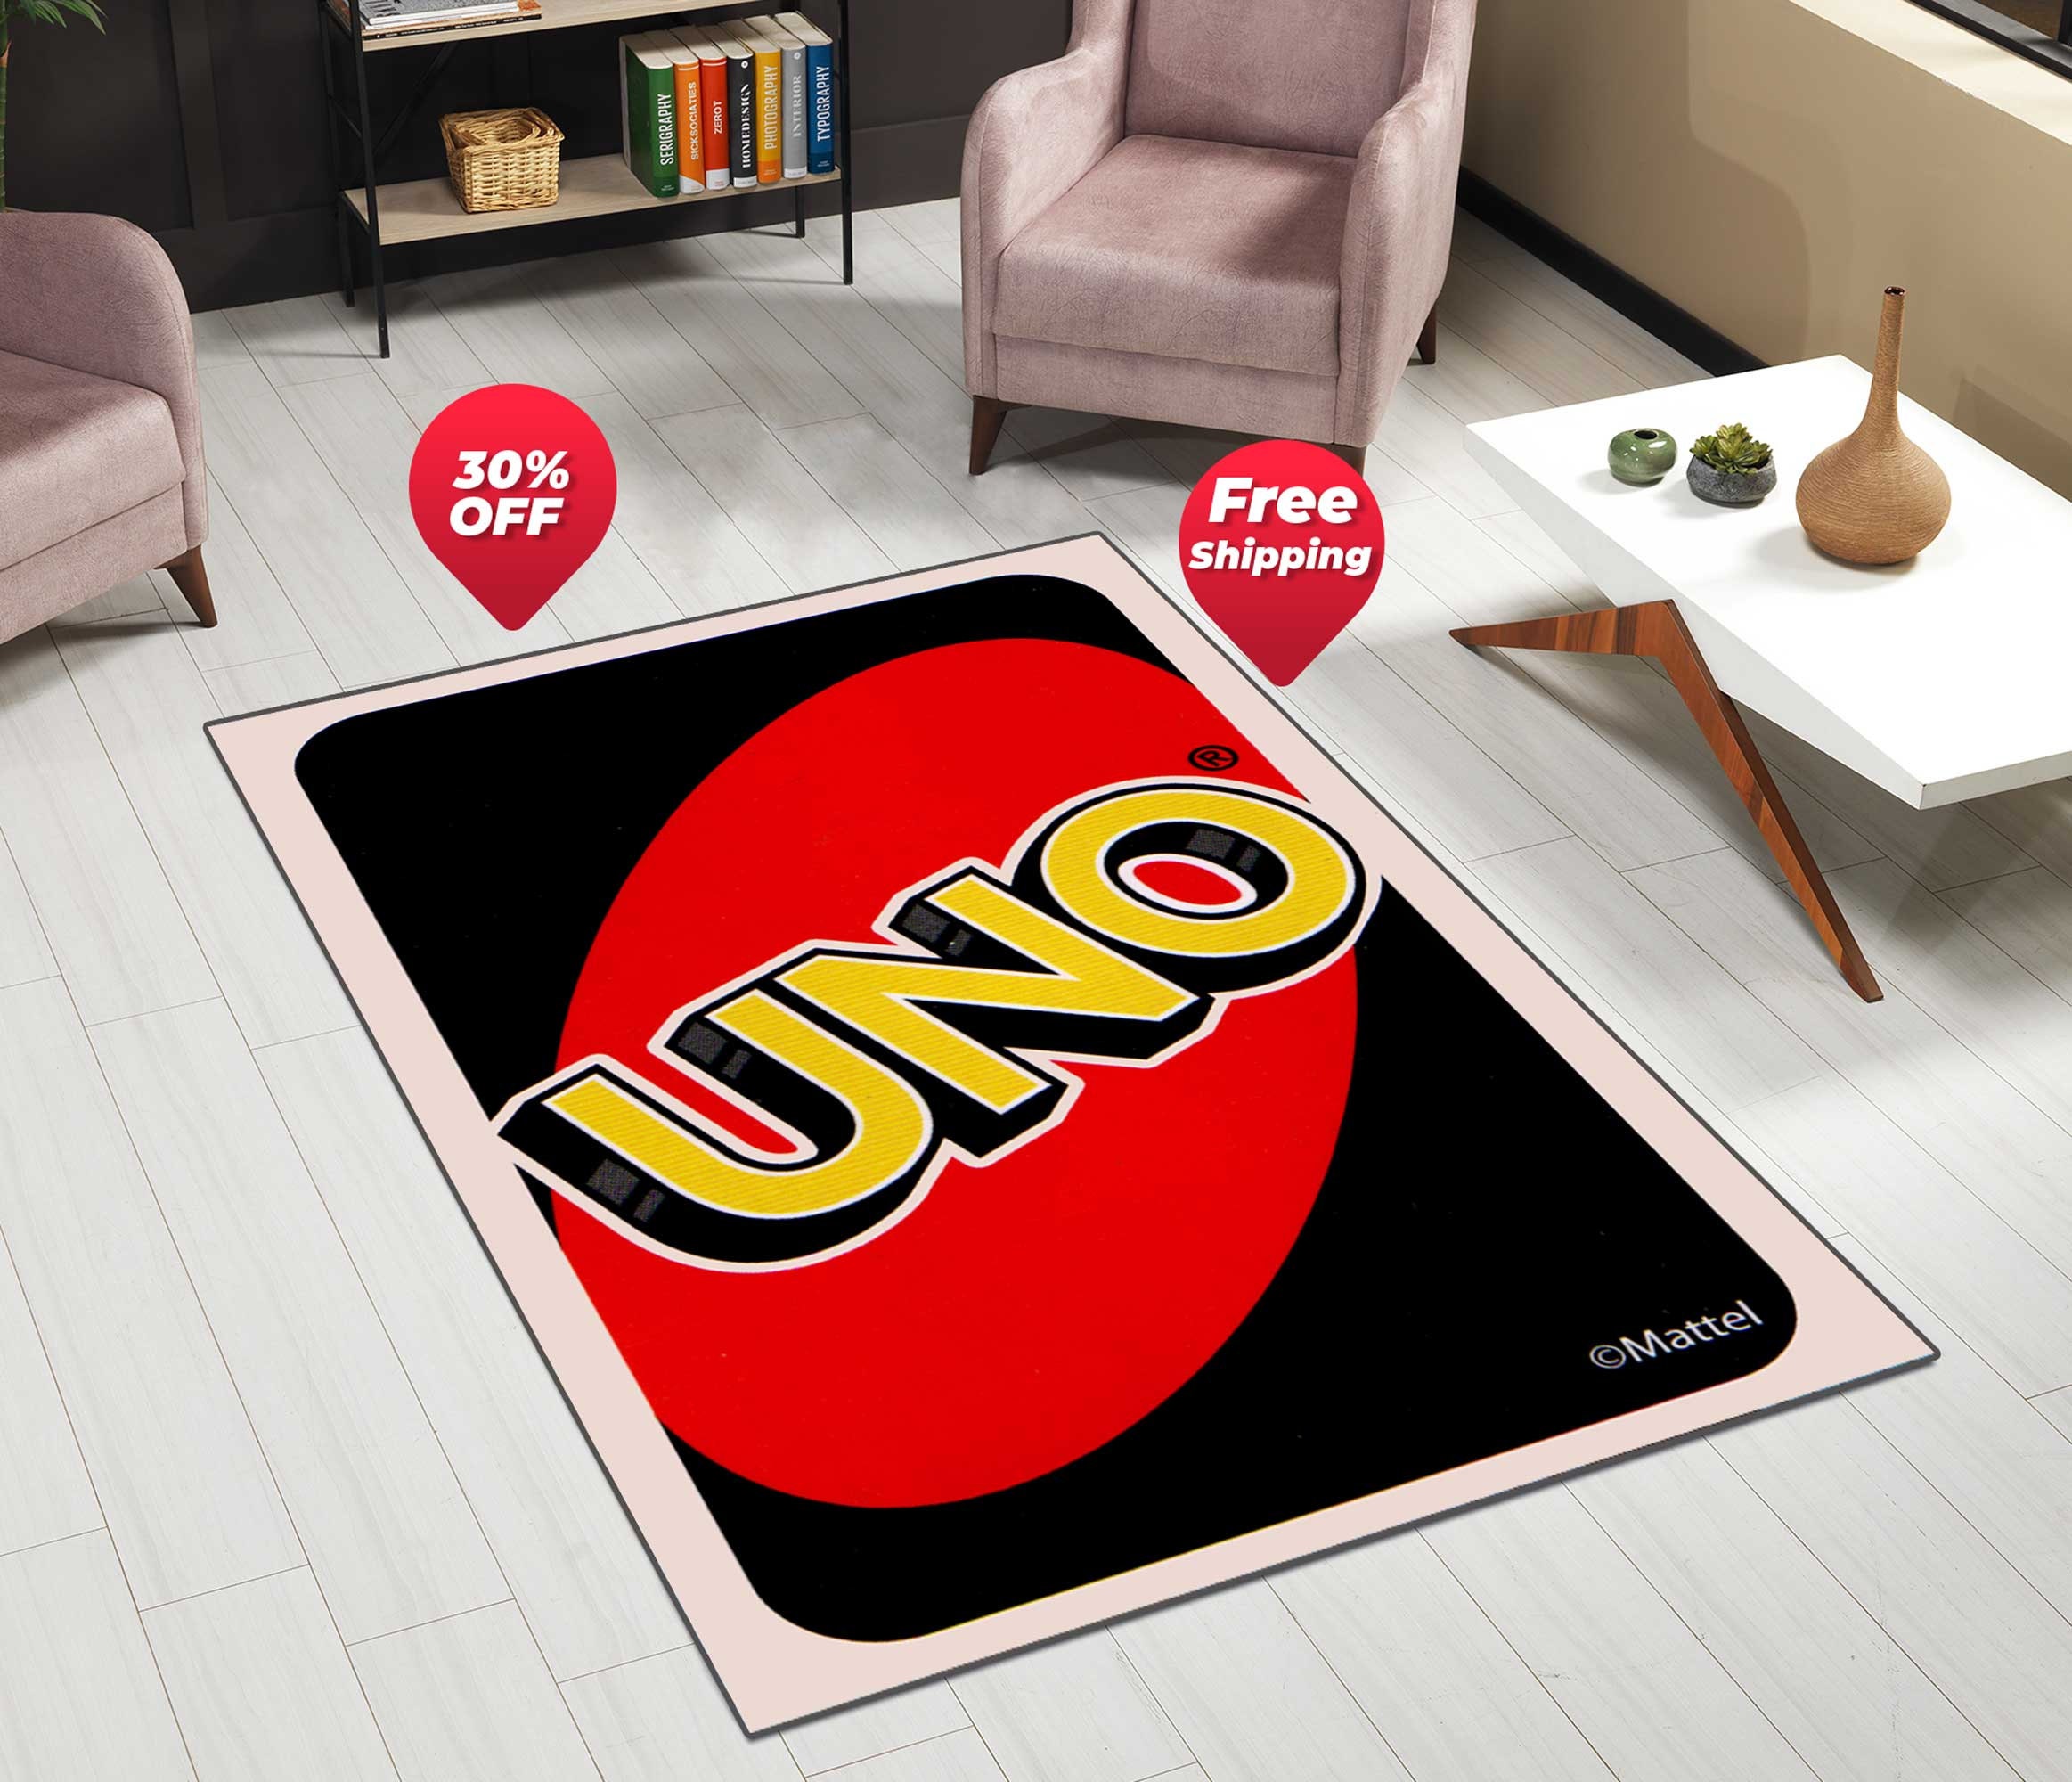 Purple UNO Reverse Card - Non-slip Floor Mats - Fluffy Runner Rug for all  Rooms